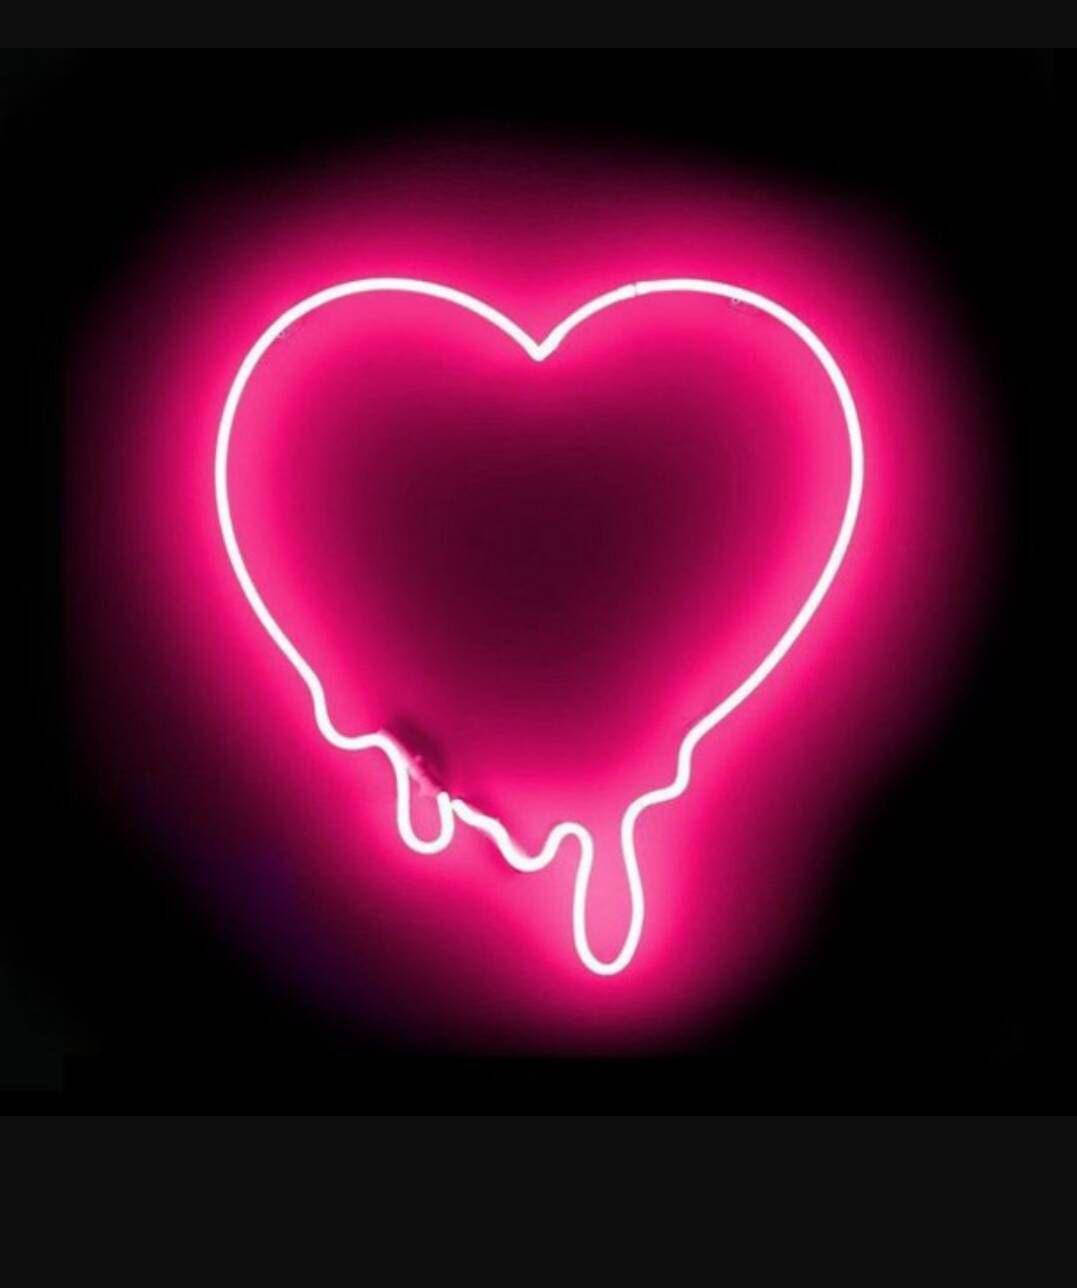 Melting Love: An Aesthetic Pink Heart